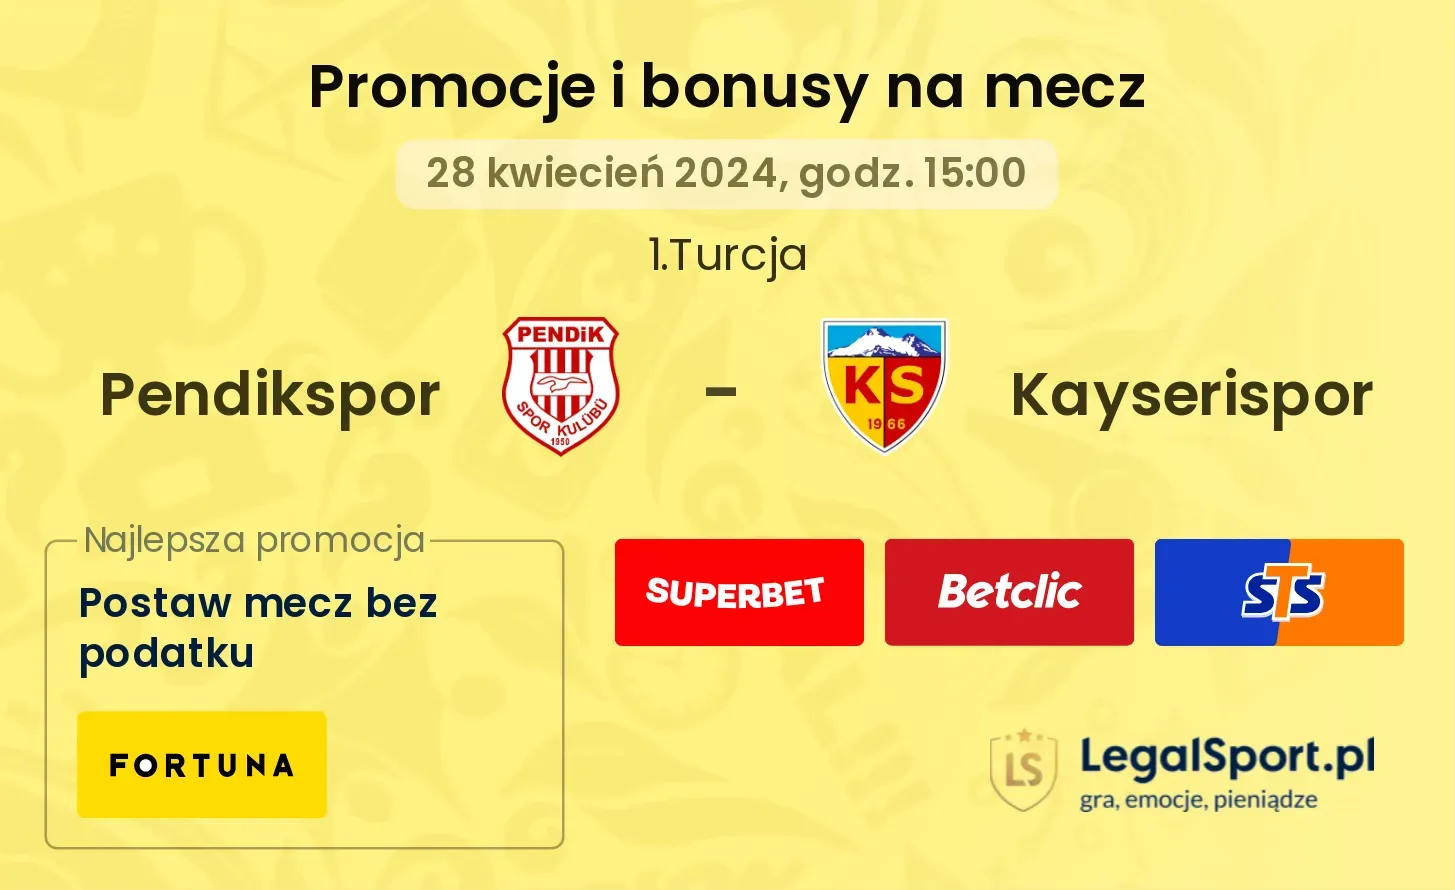 Pendikspor - Kayserispor promocje bonusy na mecz